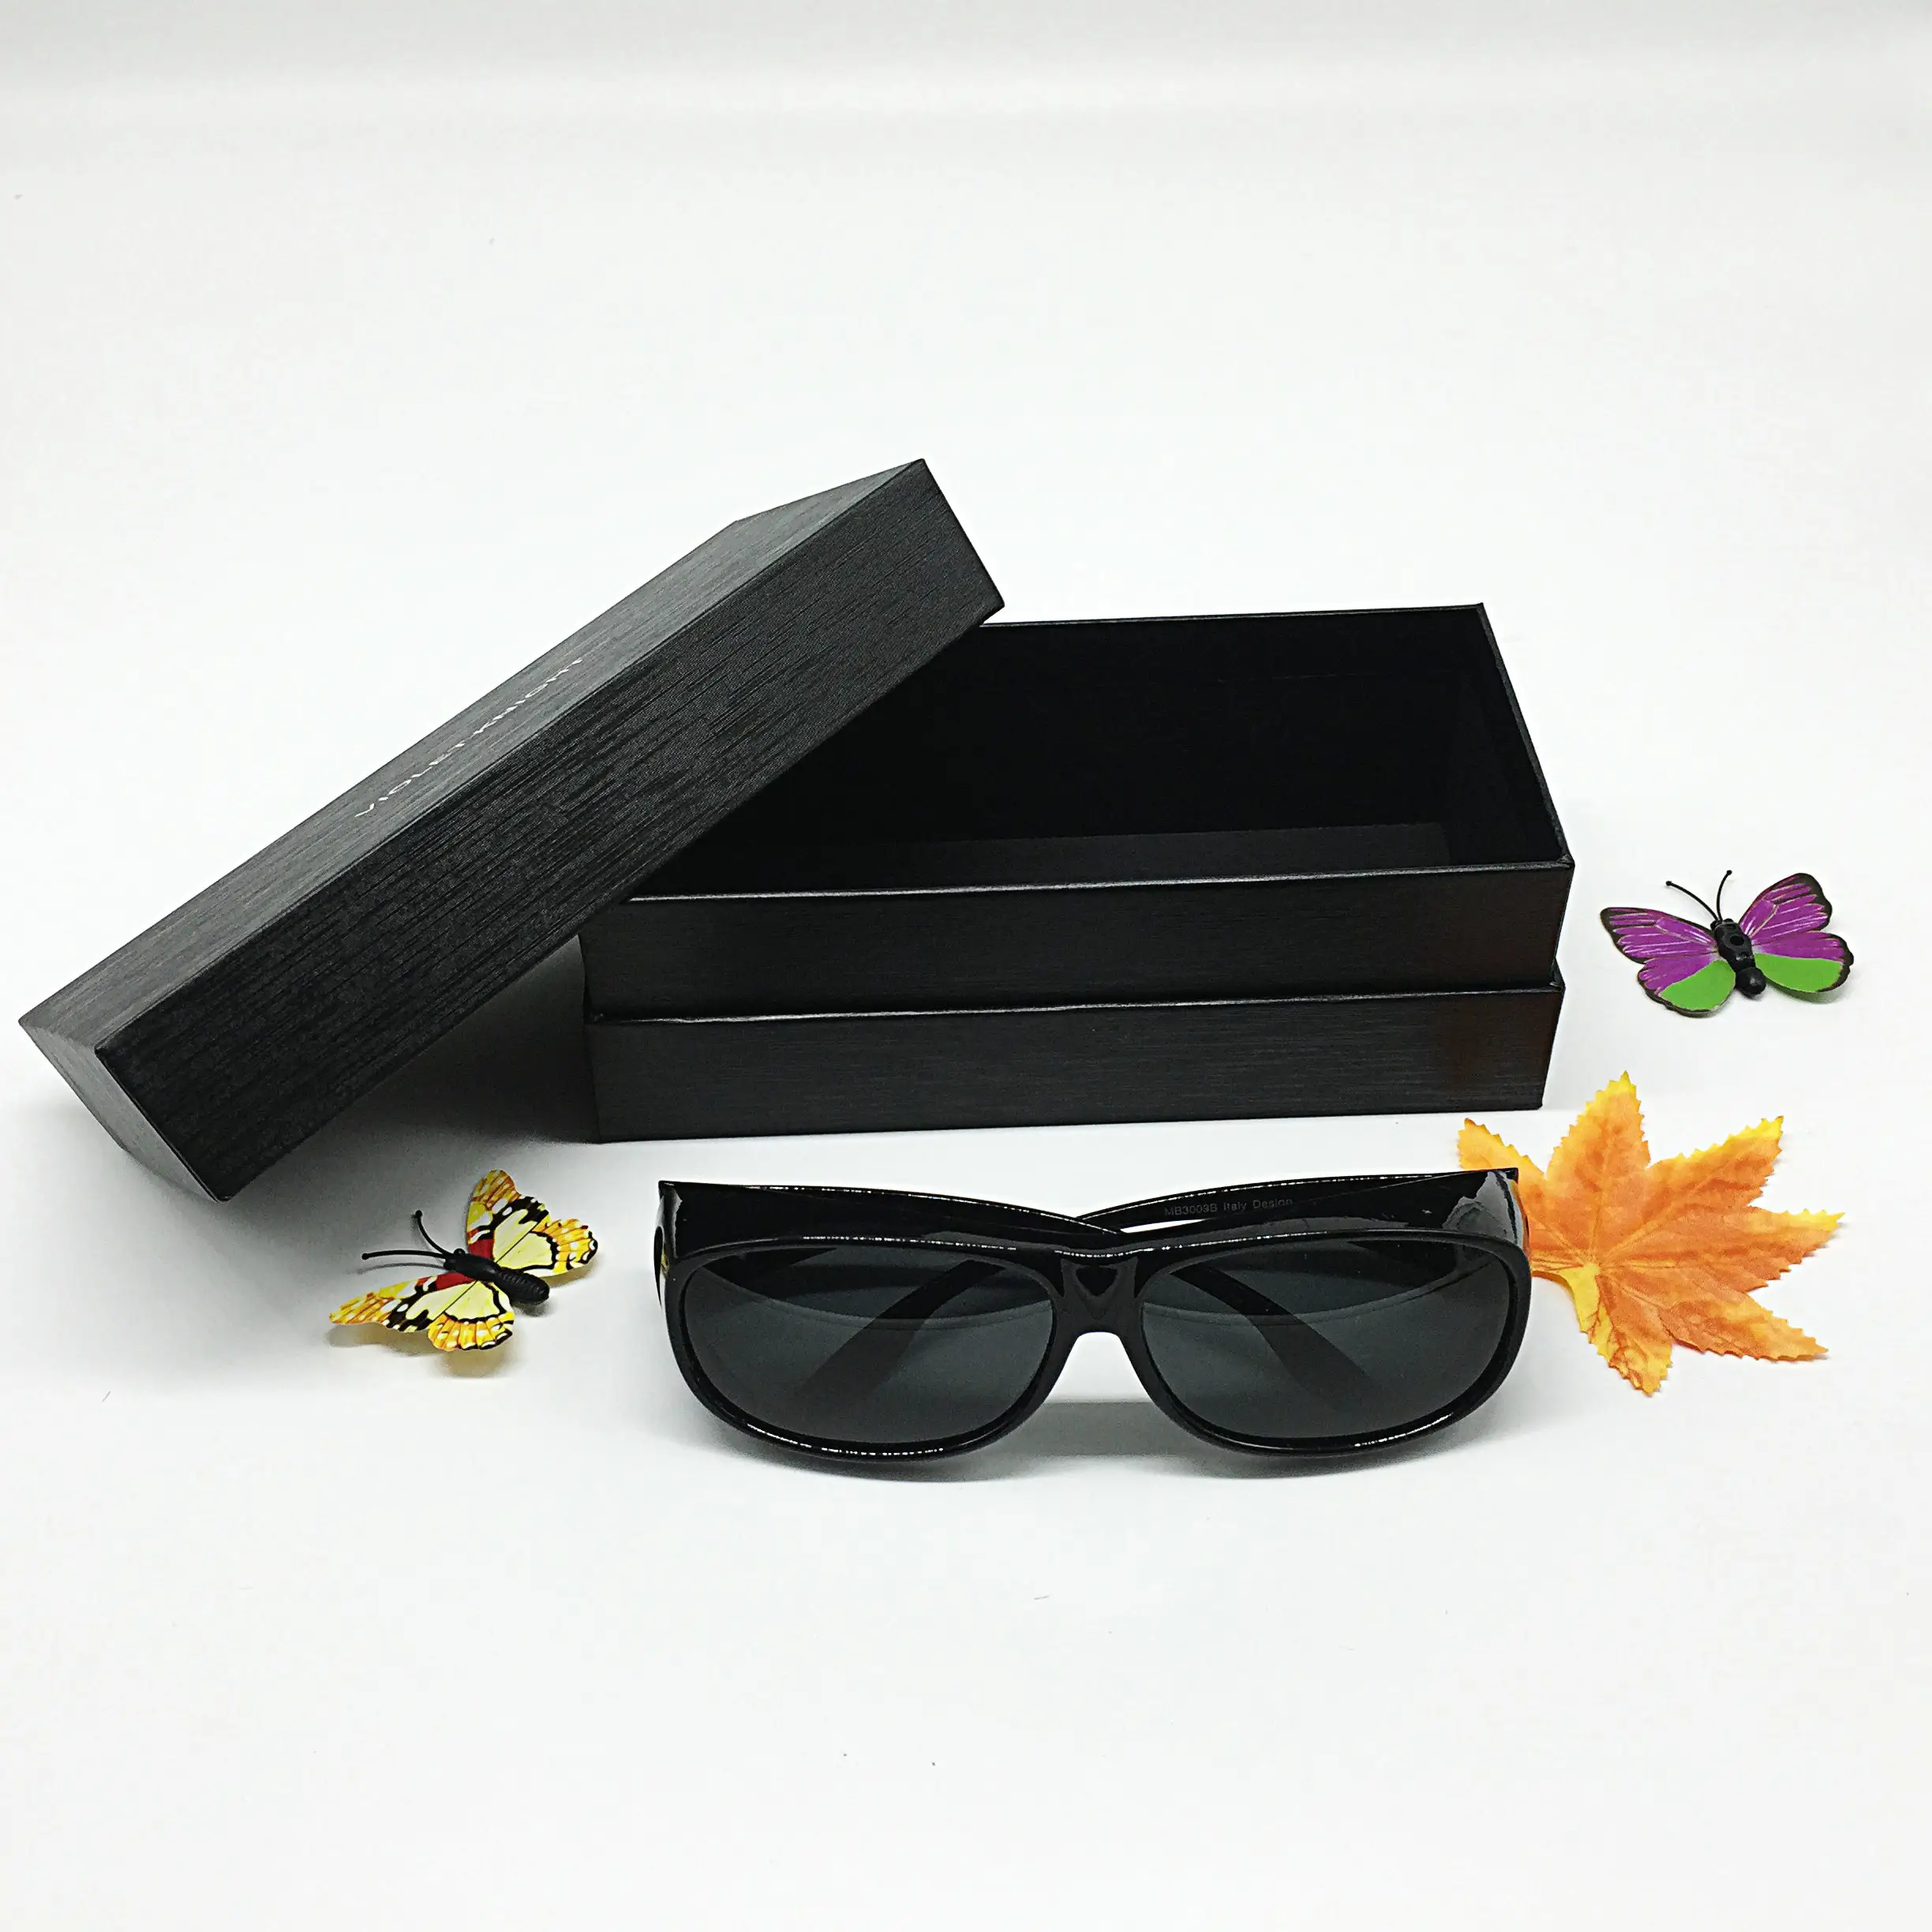 Venda por atacado impresso caixa de presente de papel personalizada de luxo para óculos de embalagem